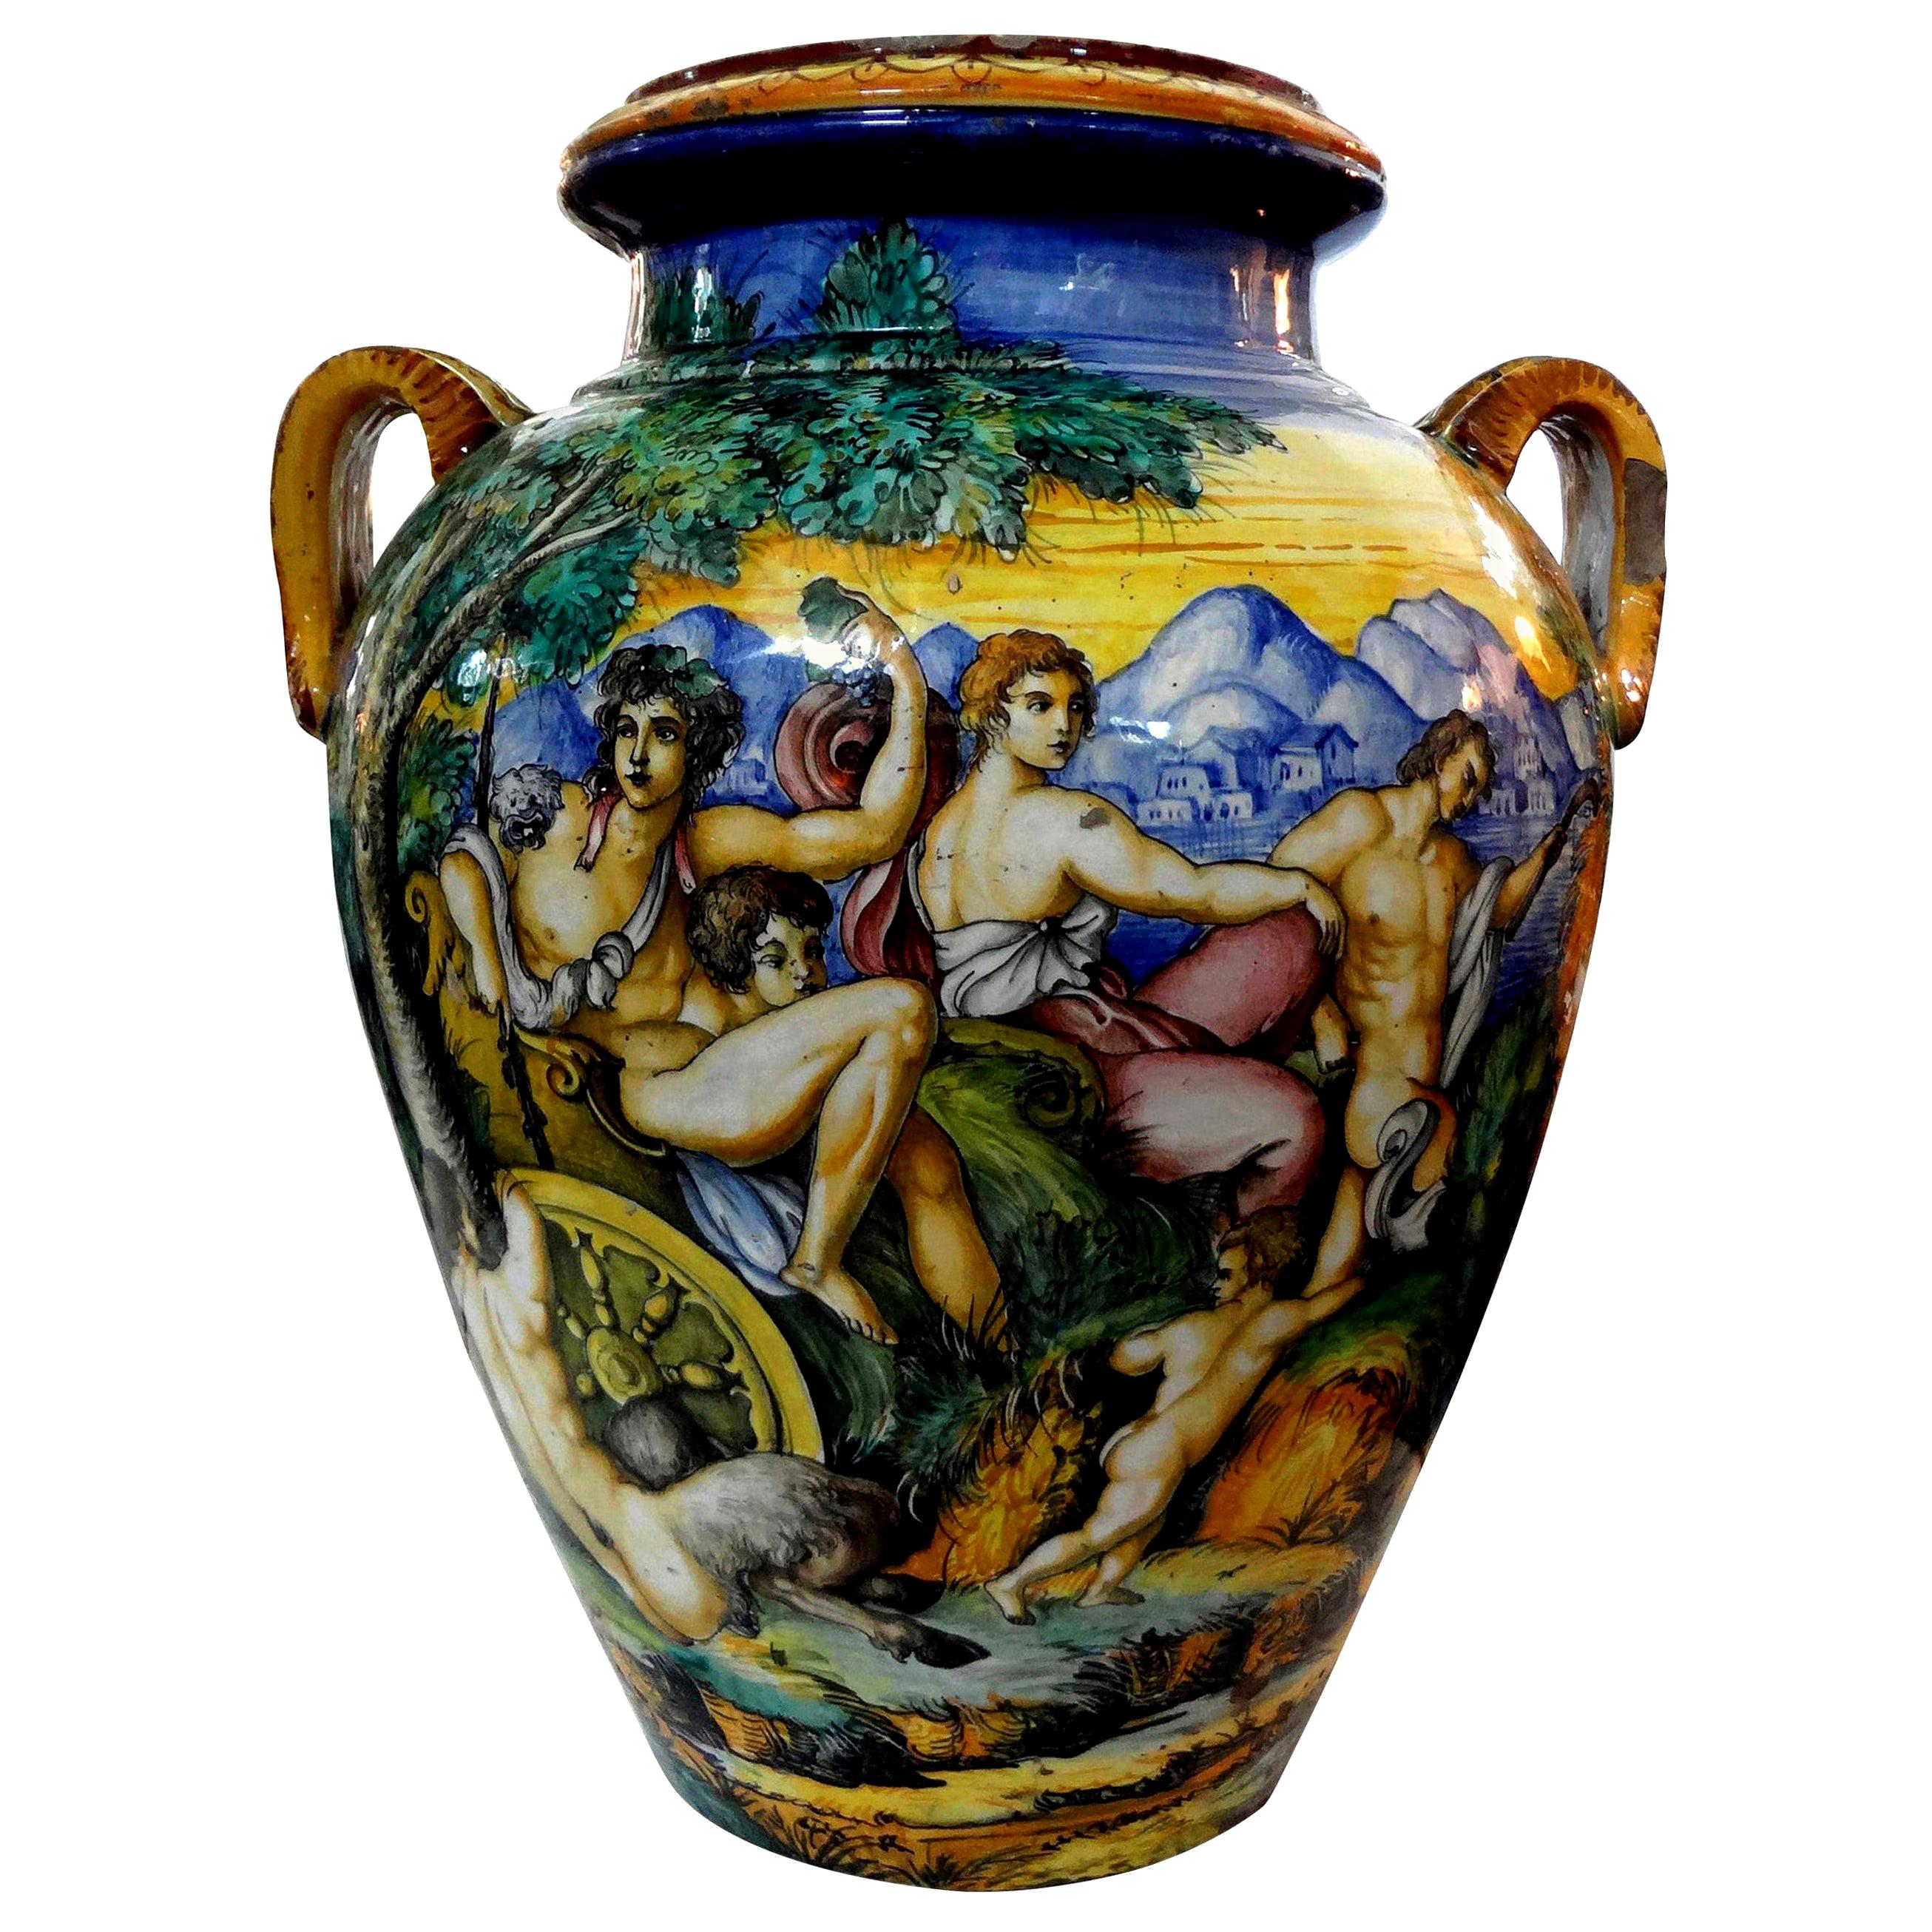 19th Century Italian Glazed Earthenware Urn Attributed to Urbino Workshop